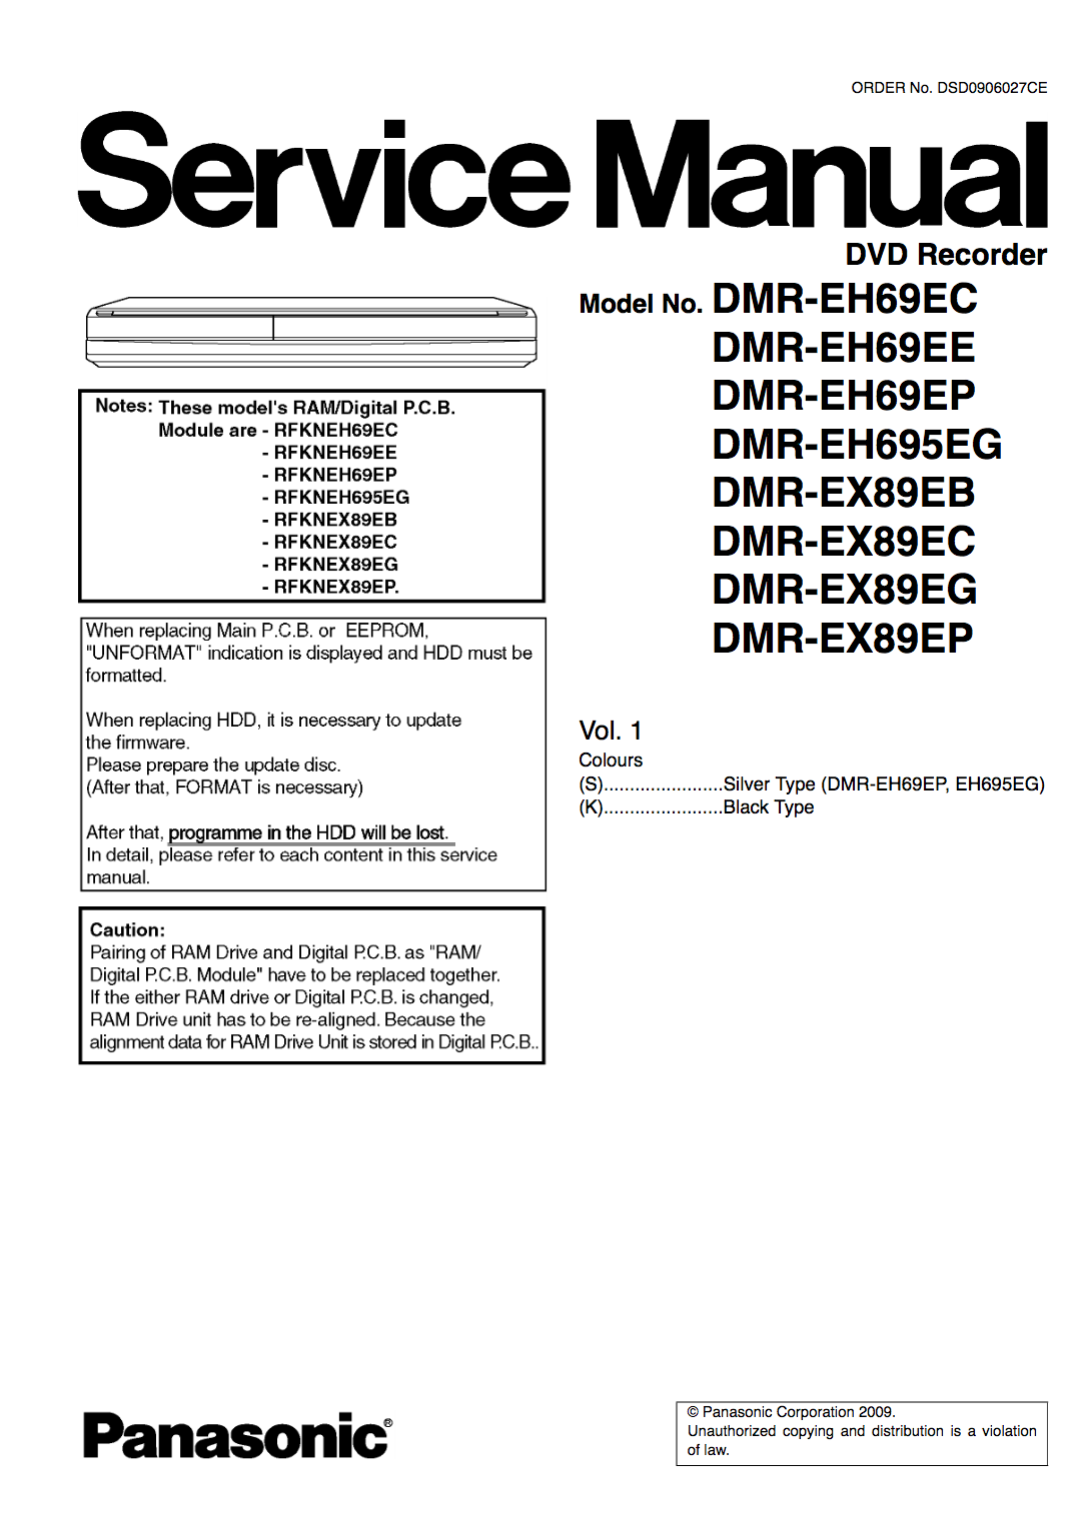 Panasonic DMR-EH69 Service Manual Complete